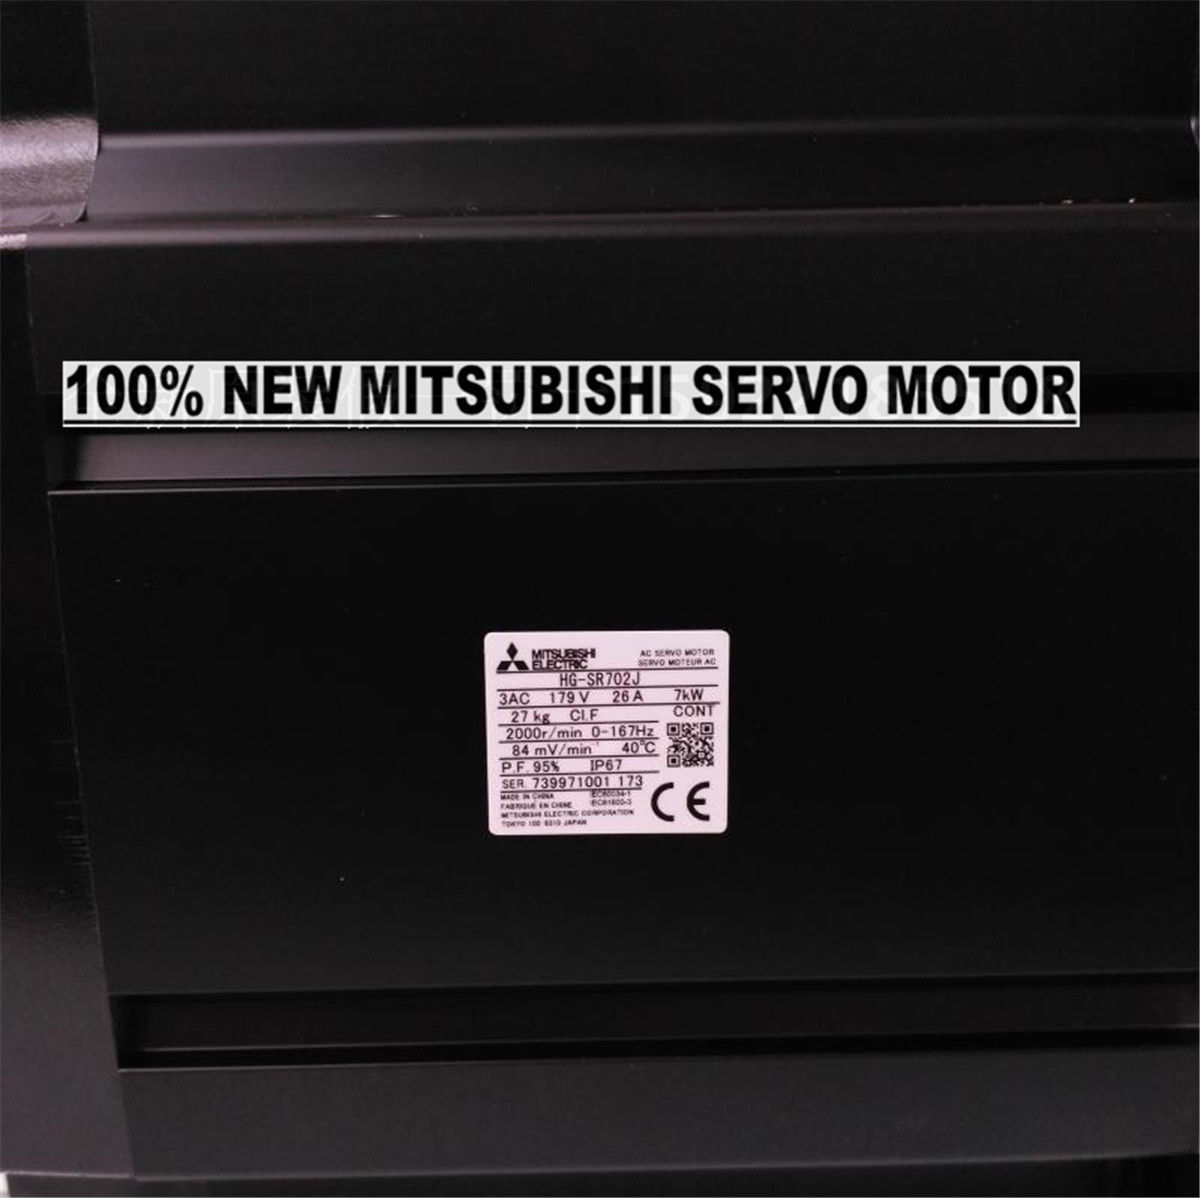 NEW Mitsubishi Servo Motor HG-SR702J in box HGSR702J - Click Image to Close